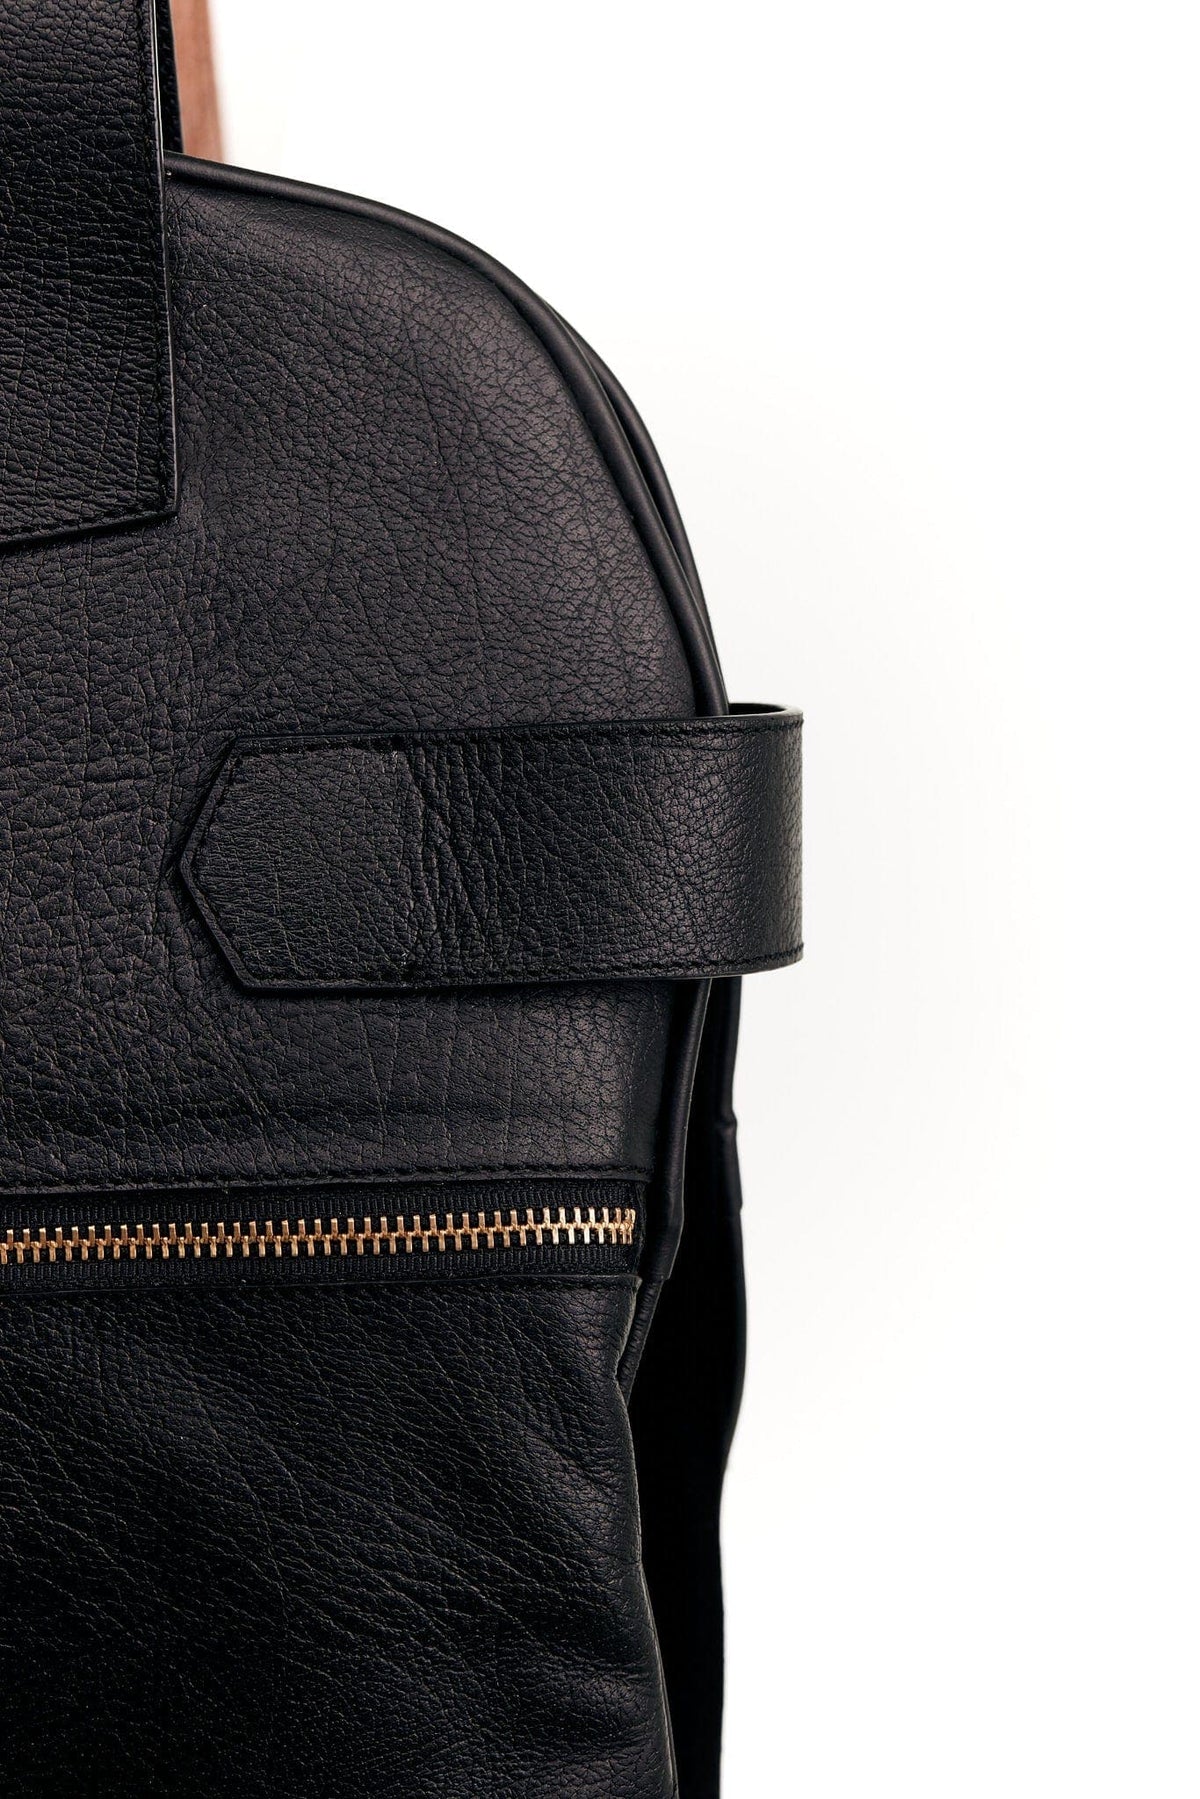 Top right view of the Eskandur black leather luxury garment bag